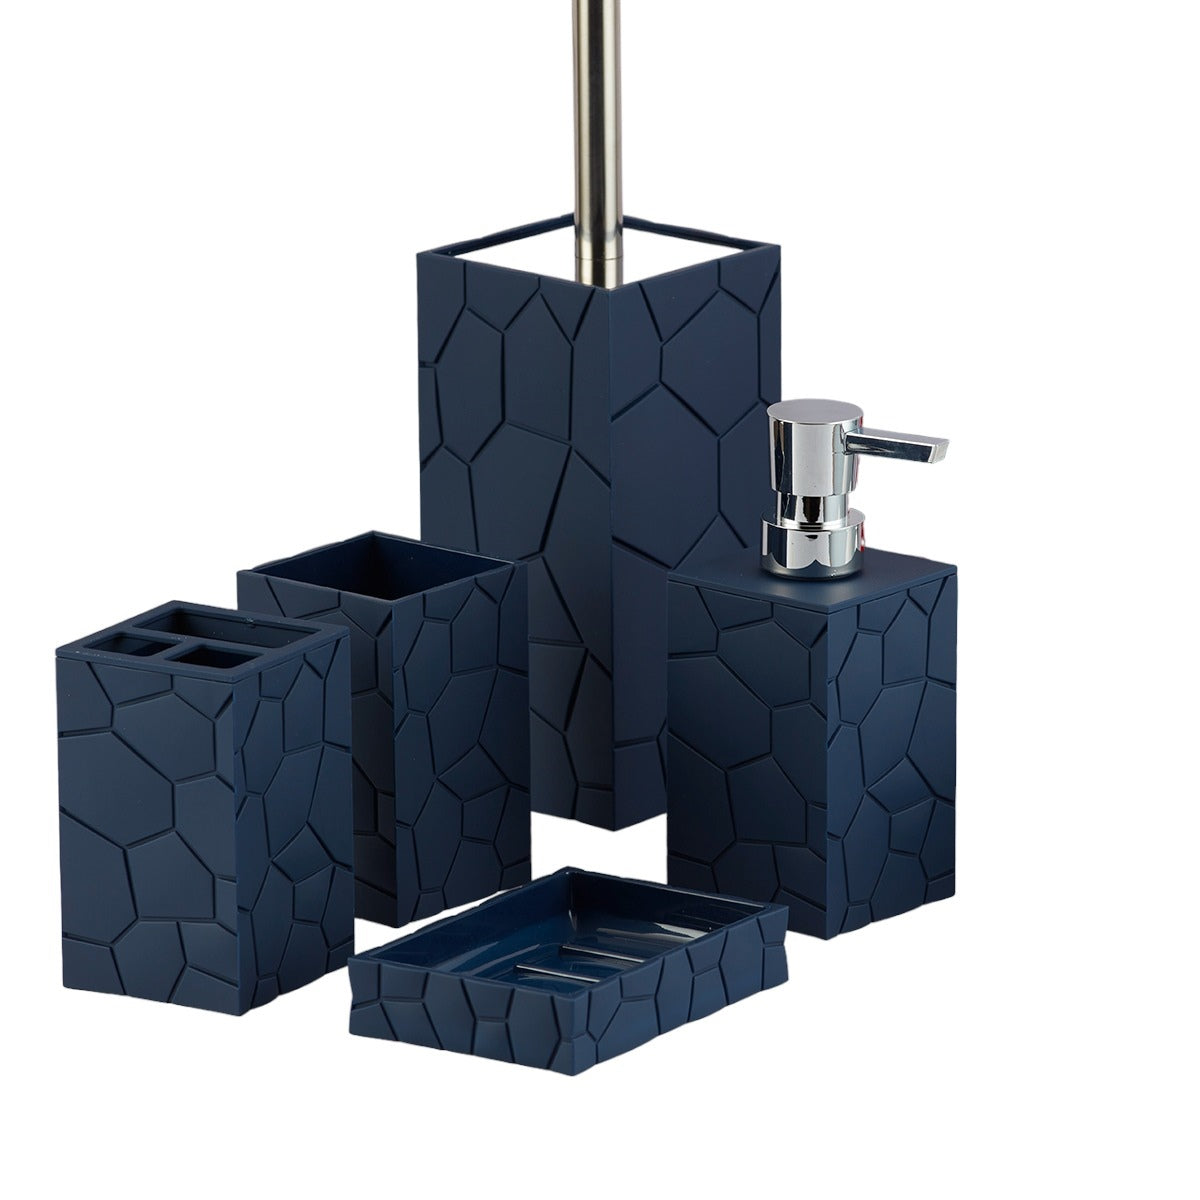 Acrylic Bathroom Accessories Set of 5 Bath Set with Soap Dispenser (10040)